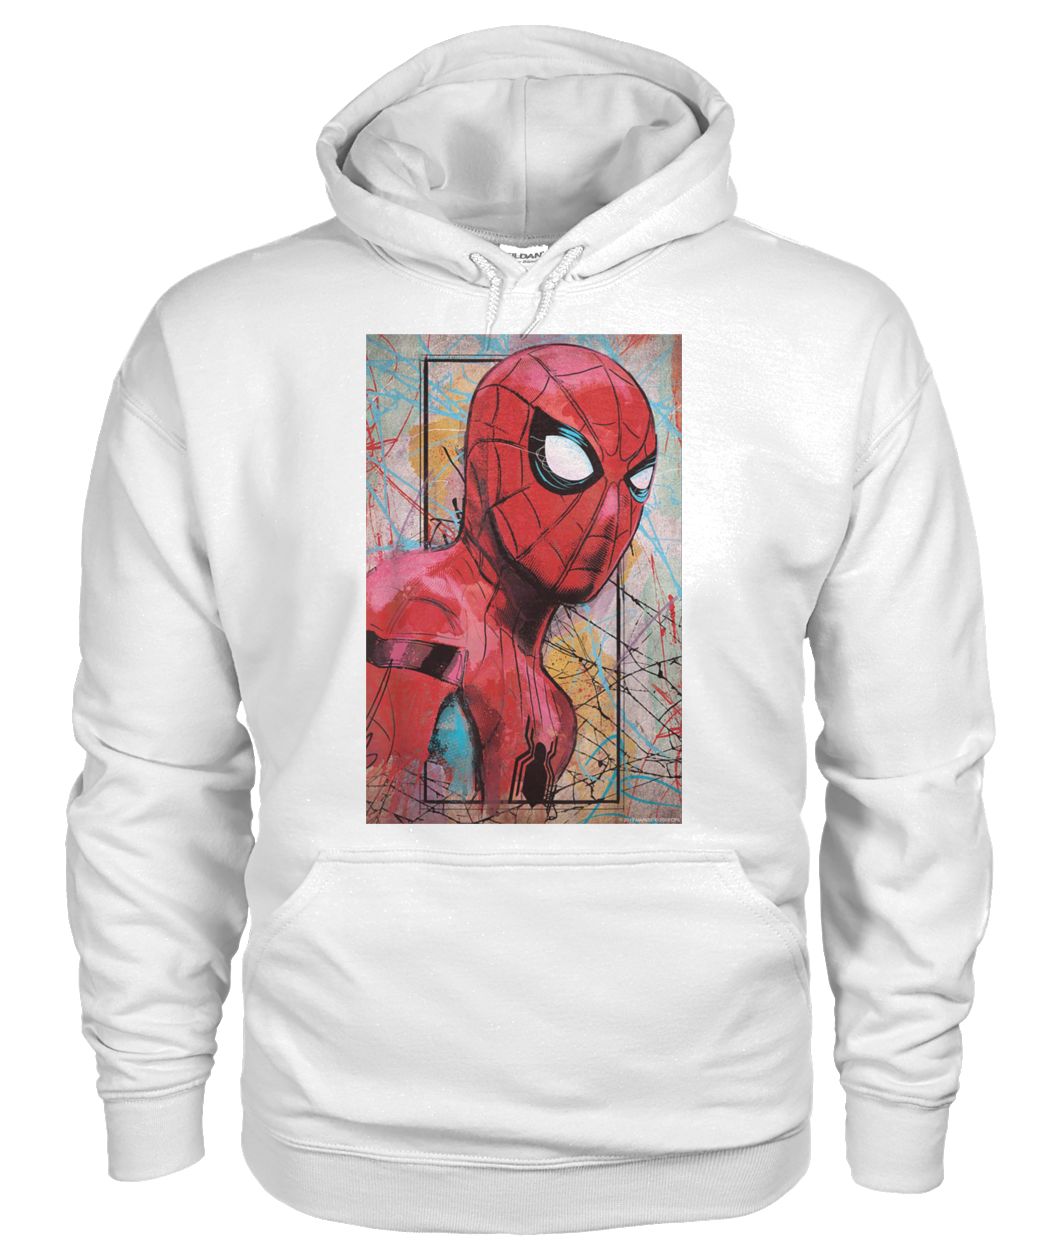 Marvel spider-man far from home poster gildan hoodie